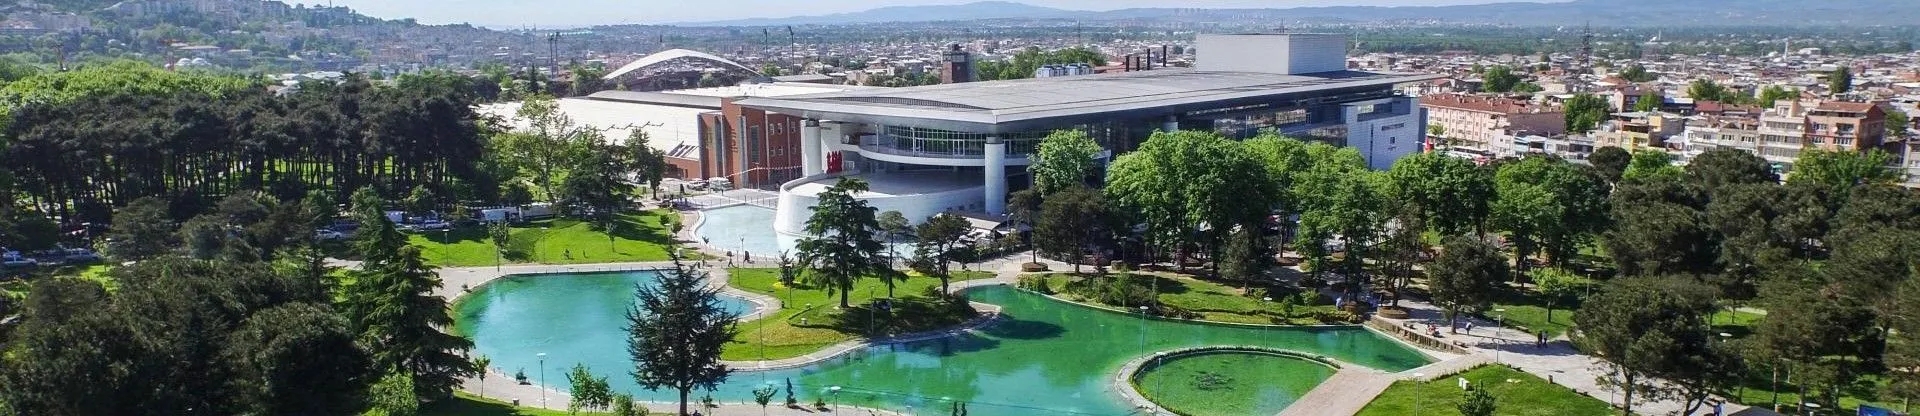 Osmangazi Salonu - Merinos Atatürk Kongre Kültür Merkezi - cover